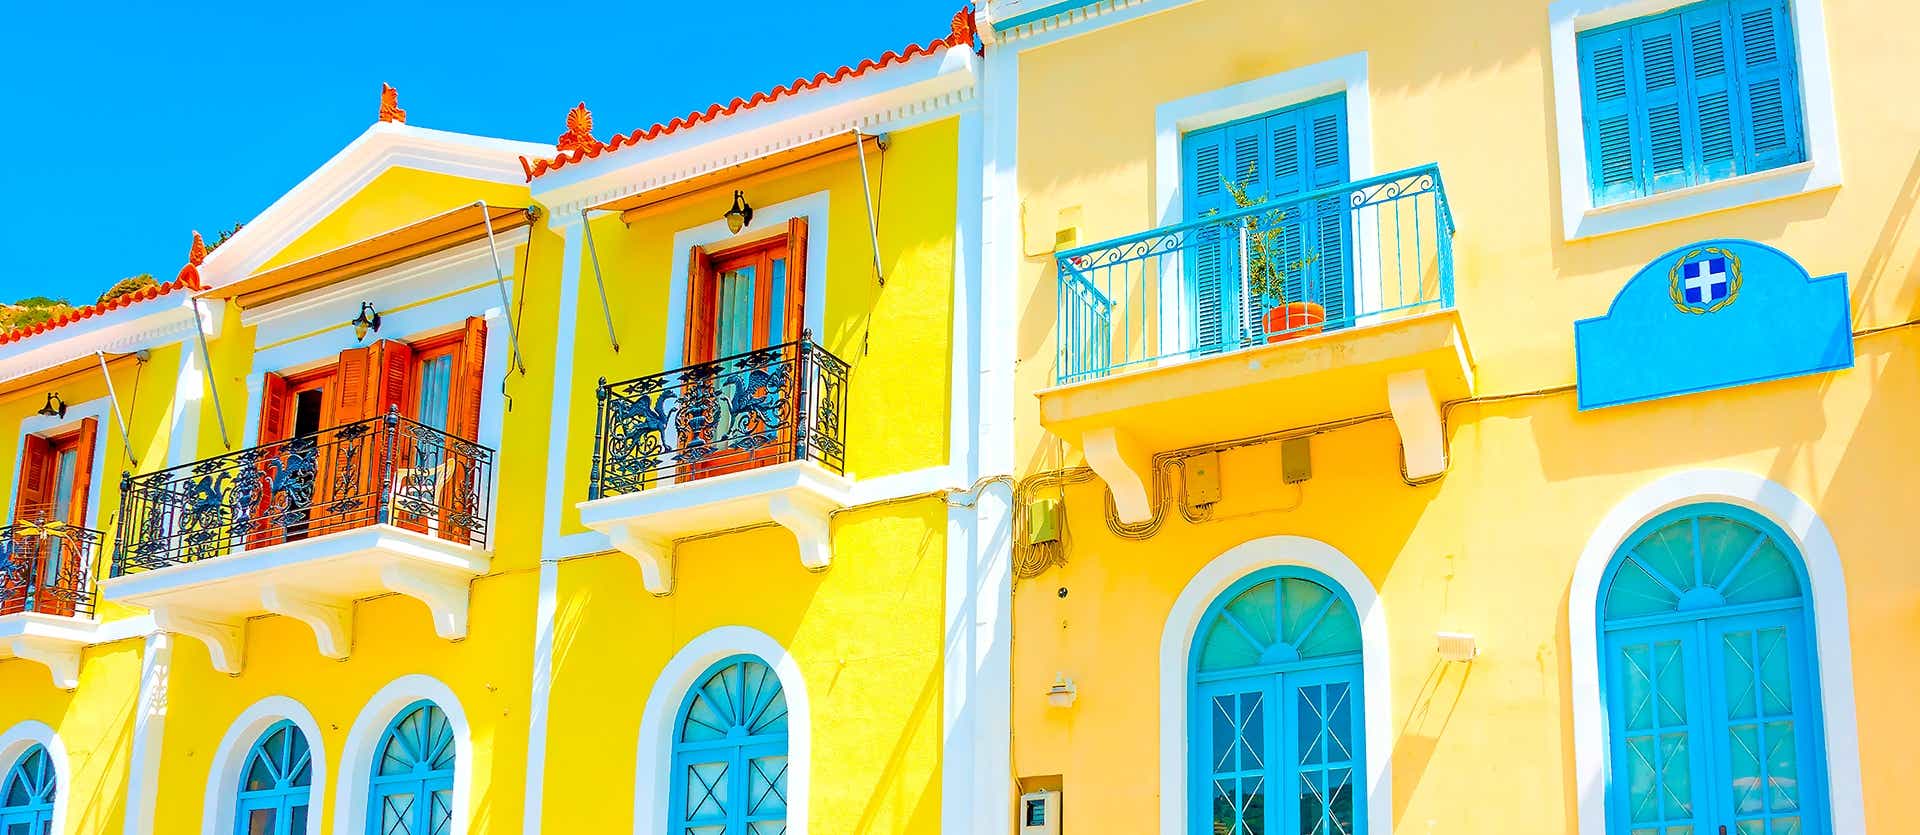 Colorful Houses <span class="iconos separador"></span> Paros <span class="iconos separador"></span> Greece